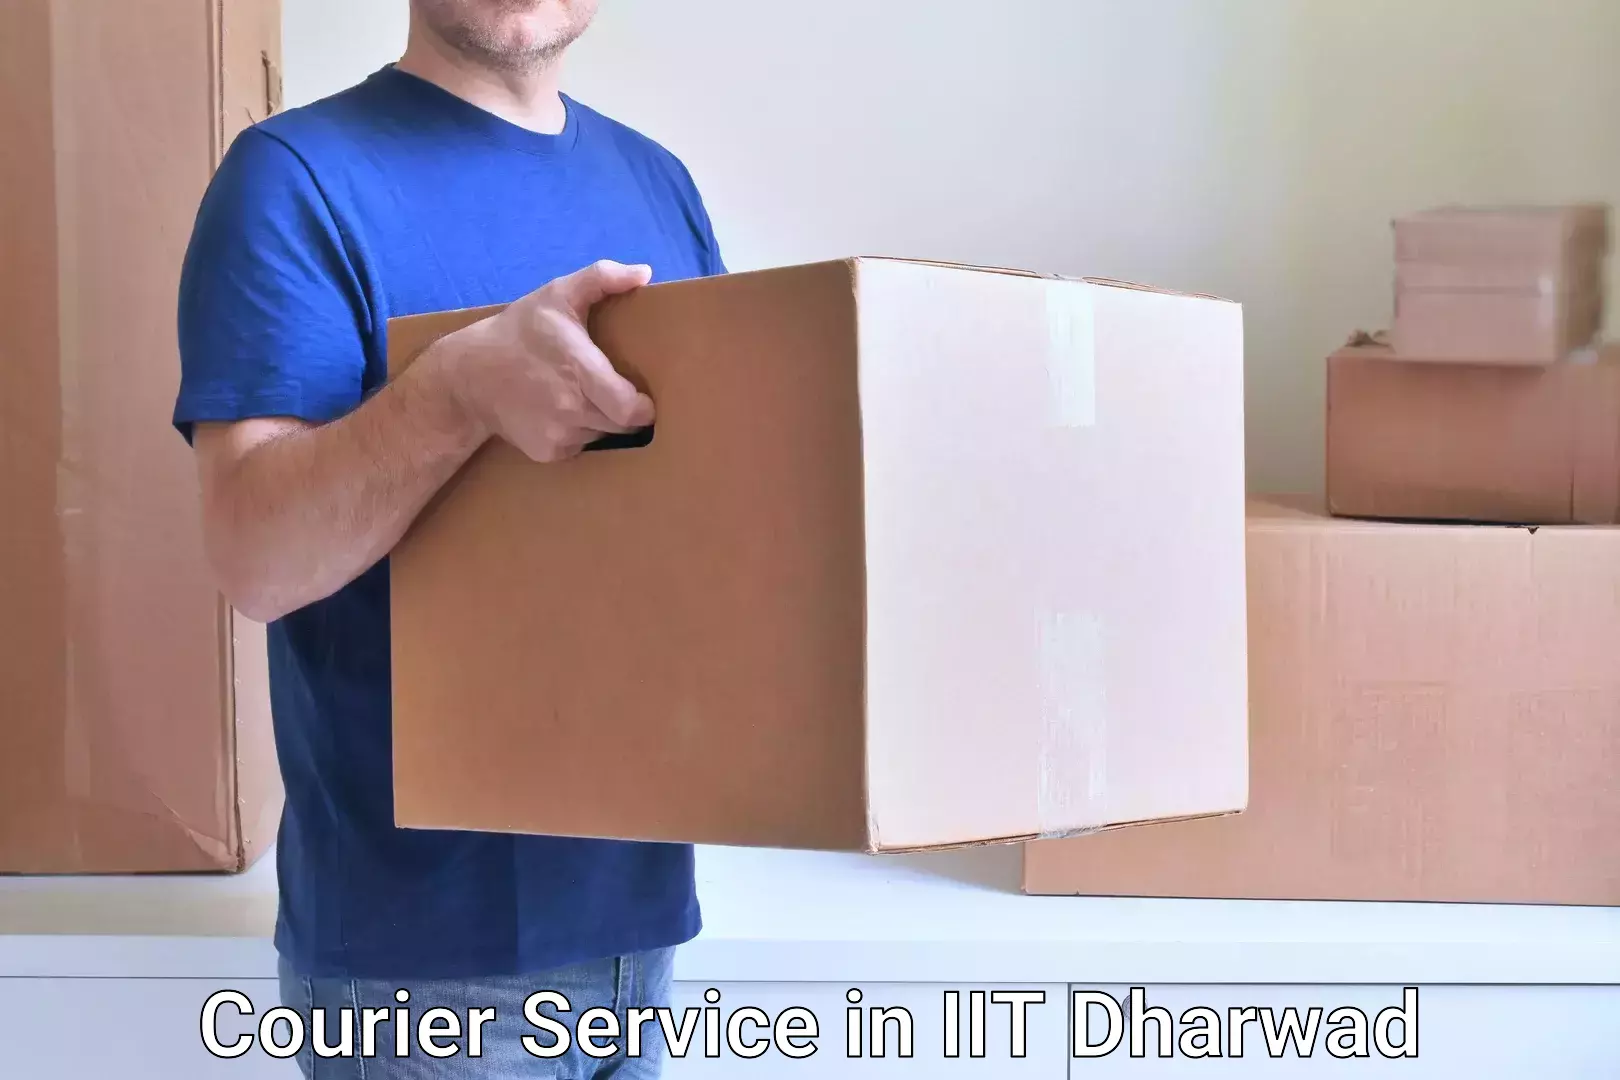 Courier service efficiency in IIT Dharwad